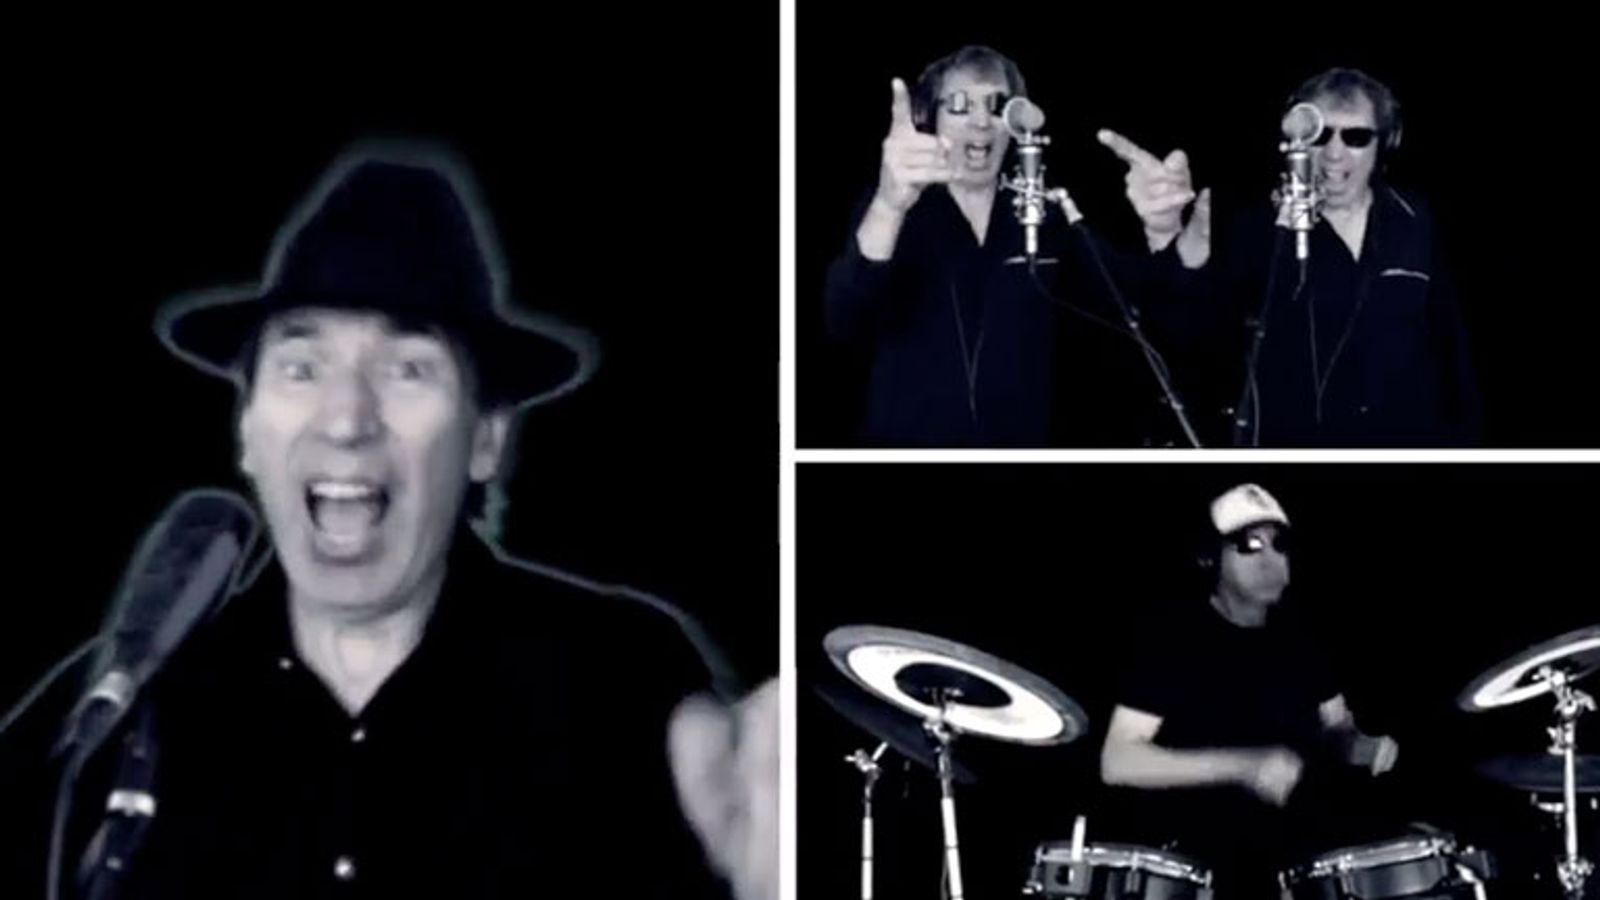 Rodney Moore Premieres Original Song & Music Video 